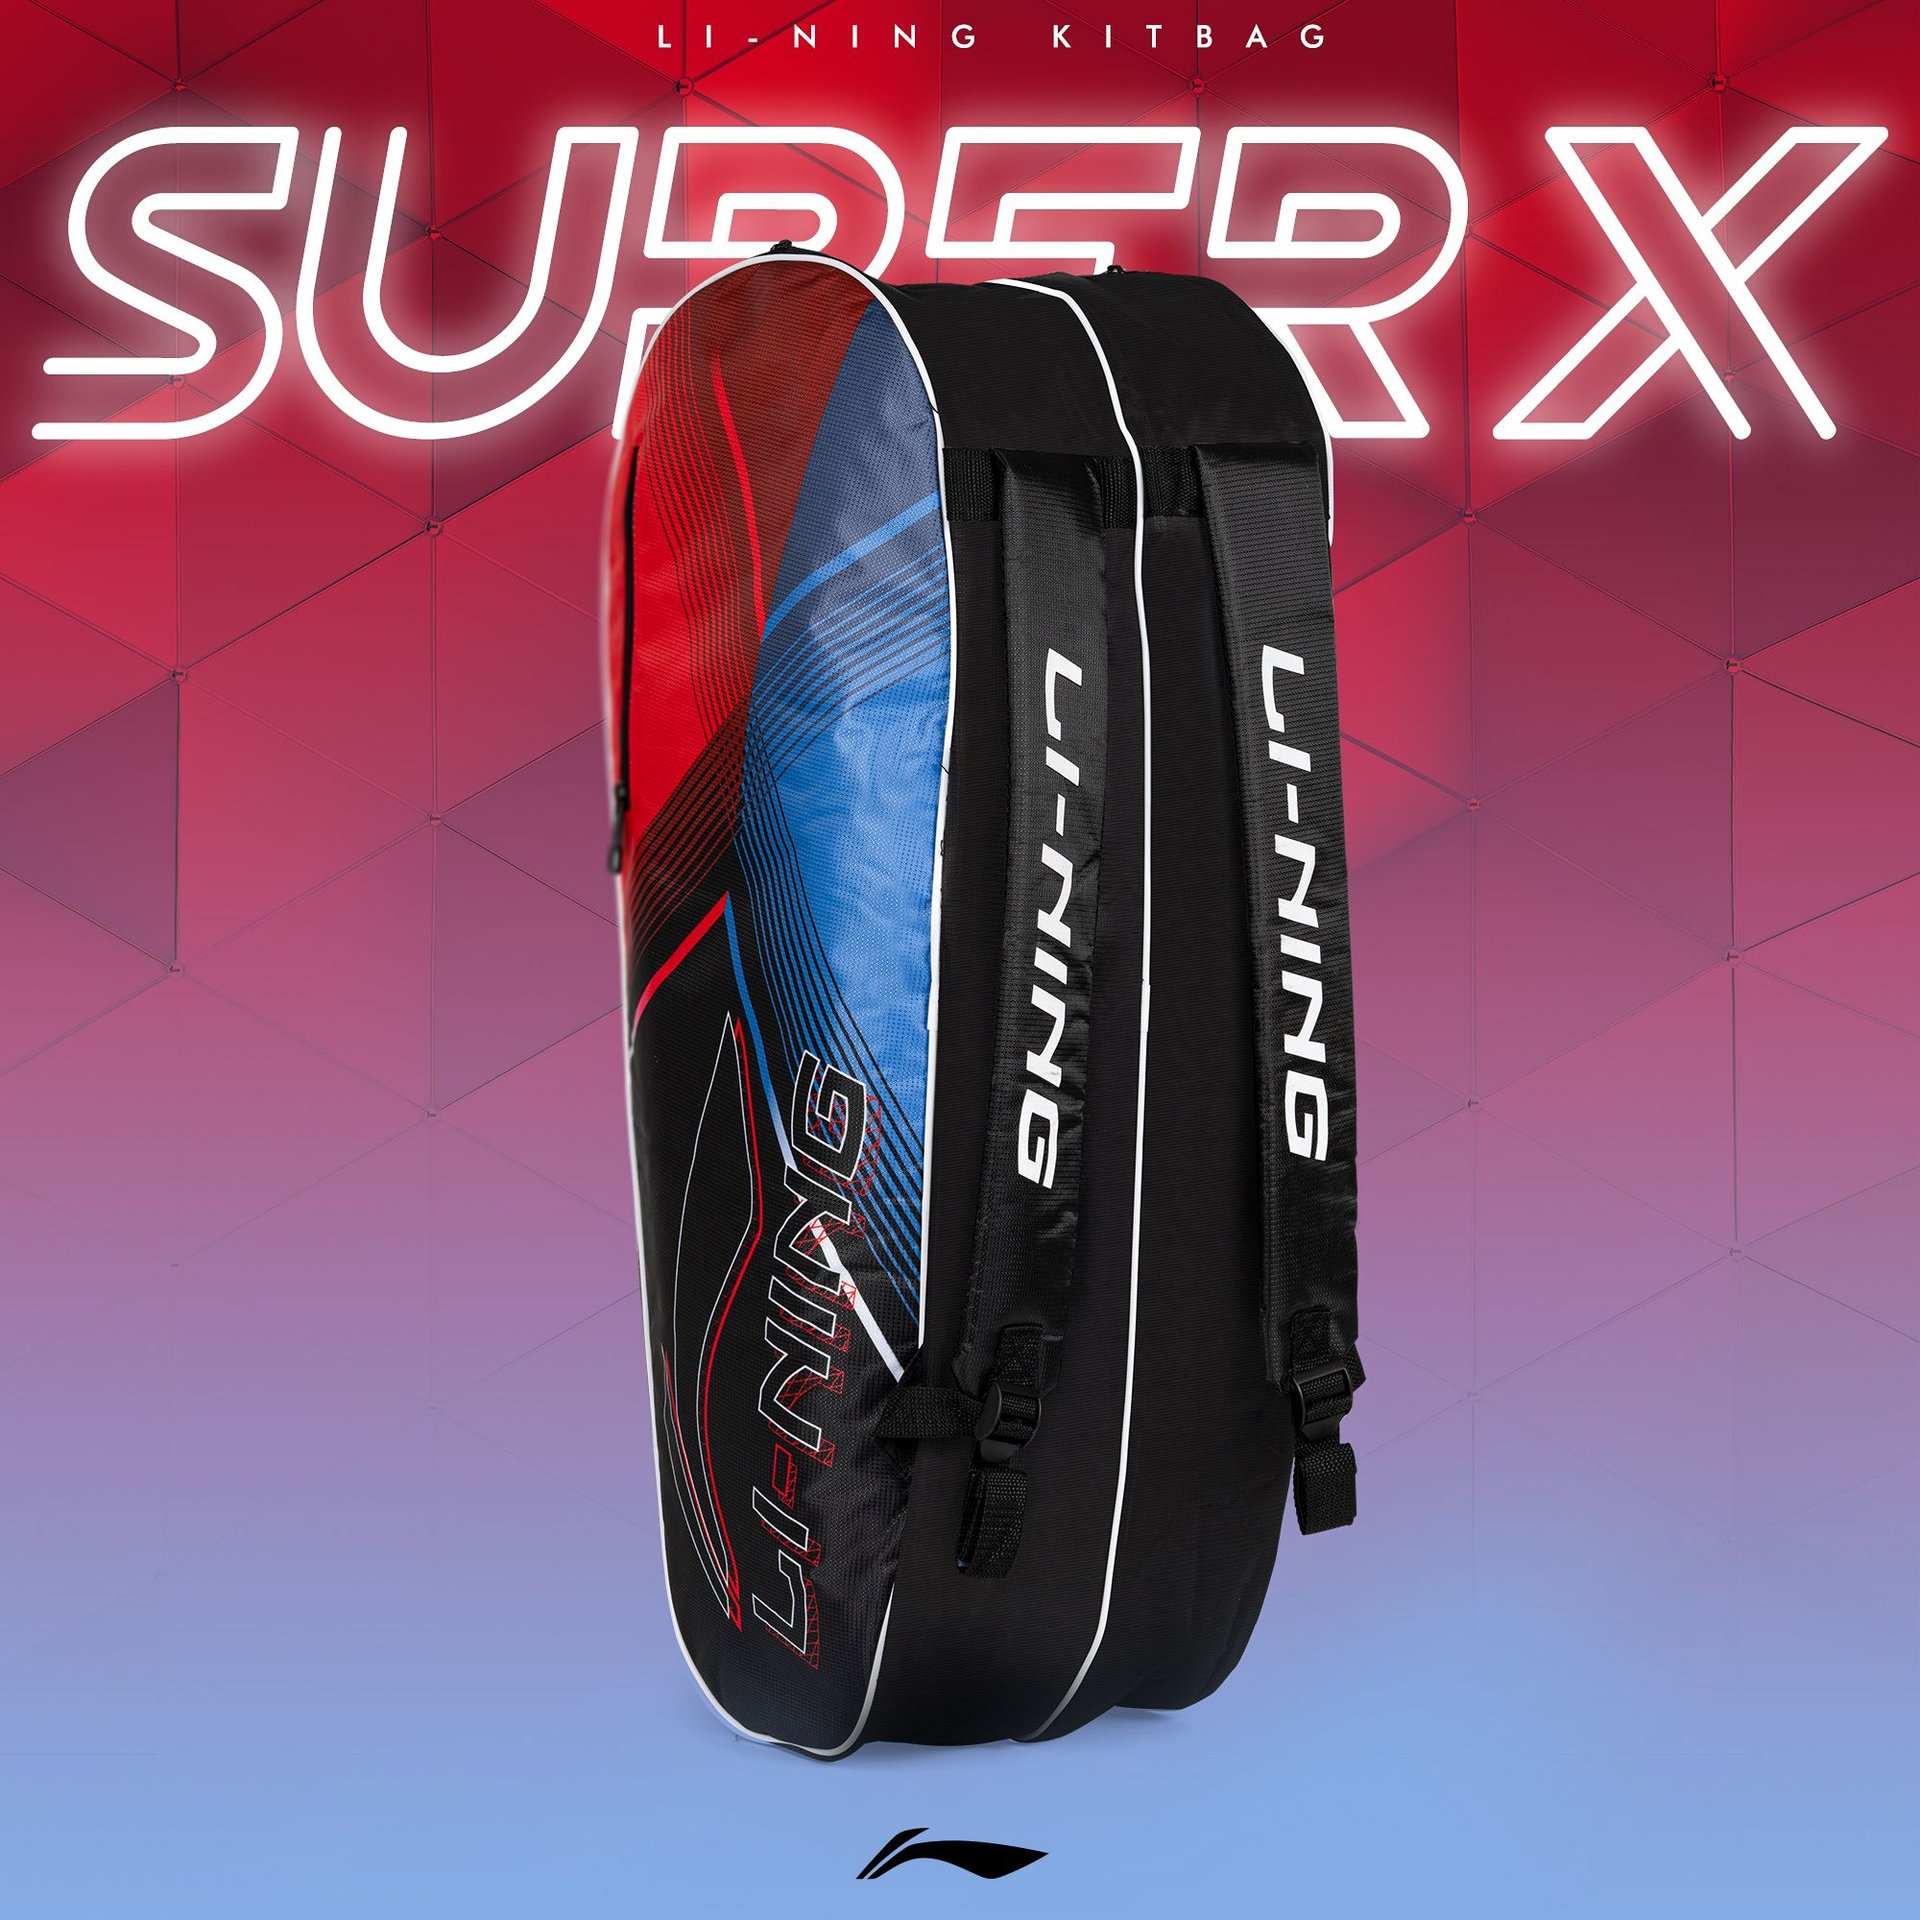 Super X Badminton Kit Bag